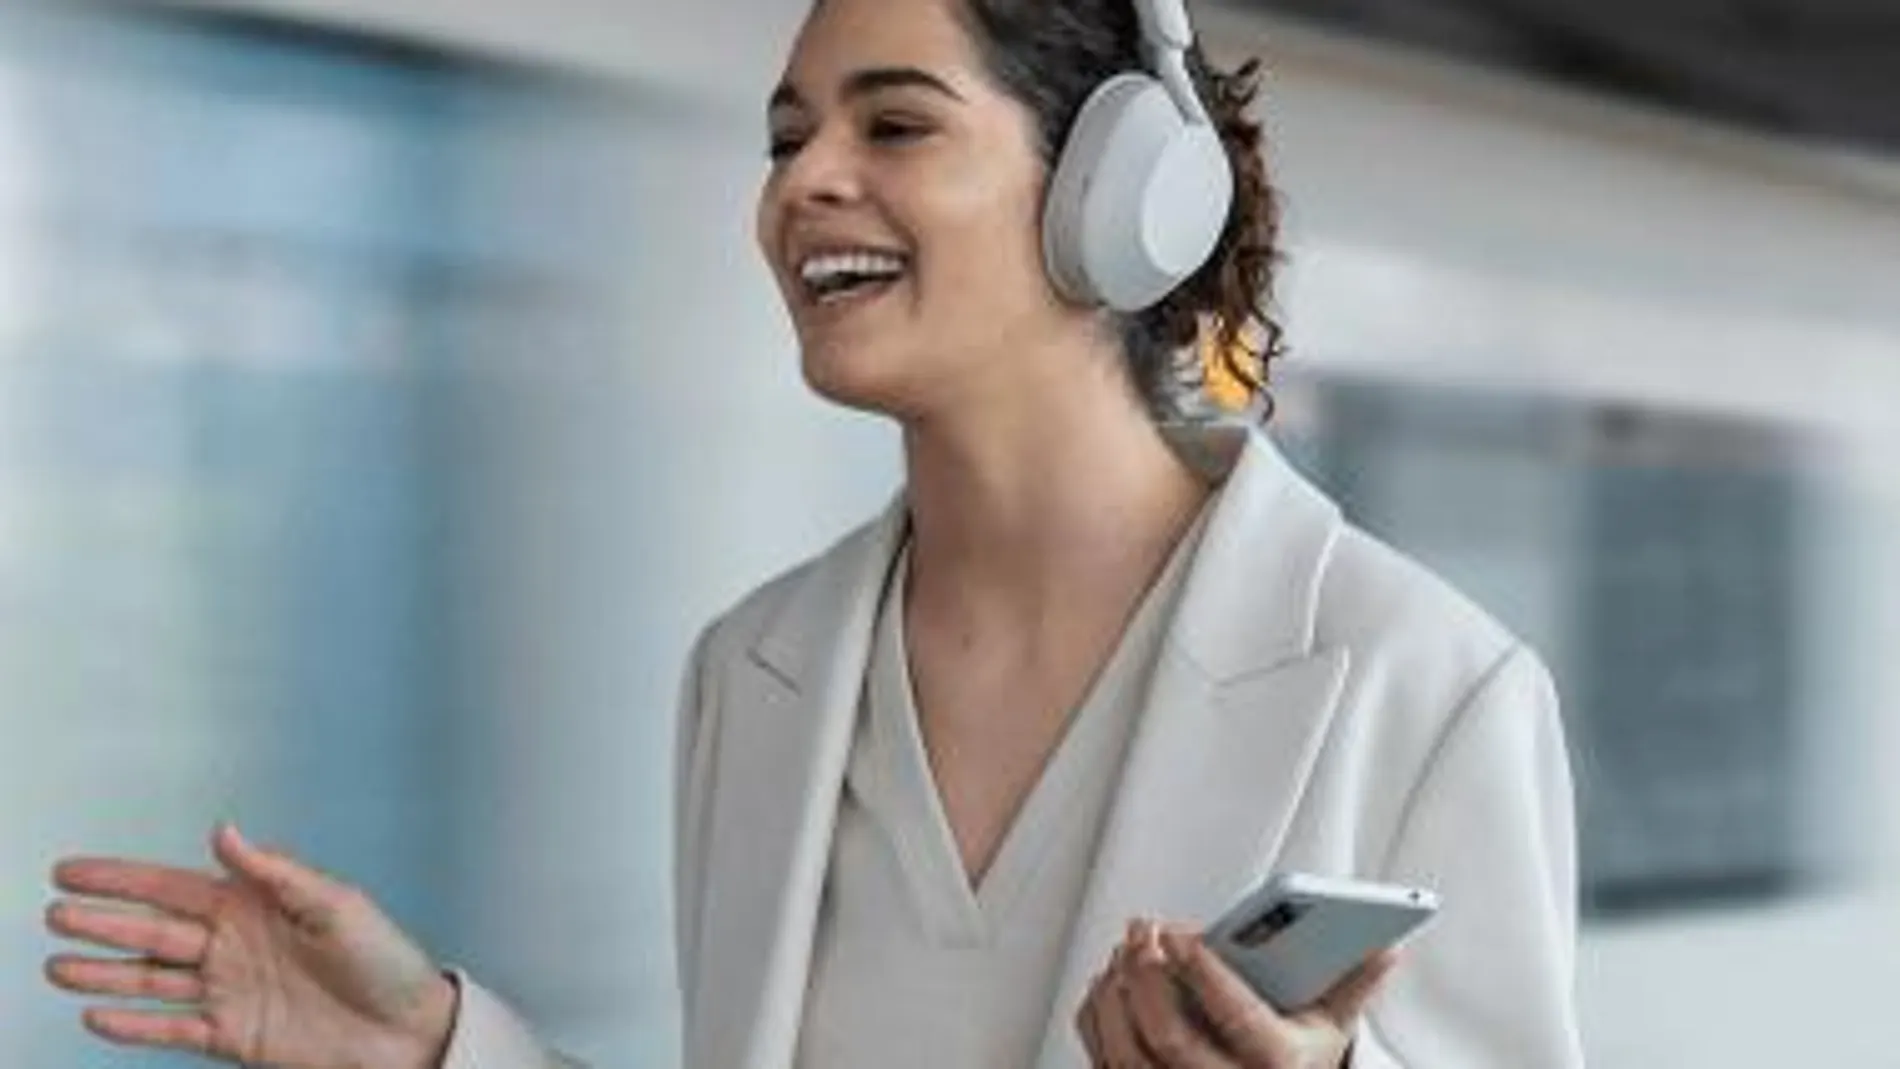 Sony-auriculares inalámbricos WH-1000XM5, cascos por Bluetooth con